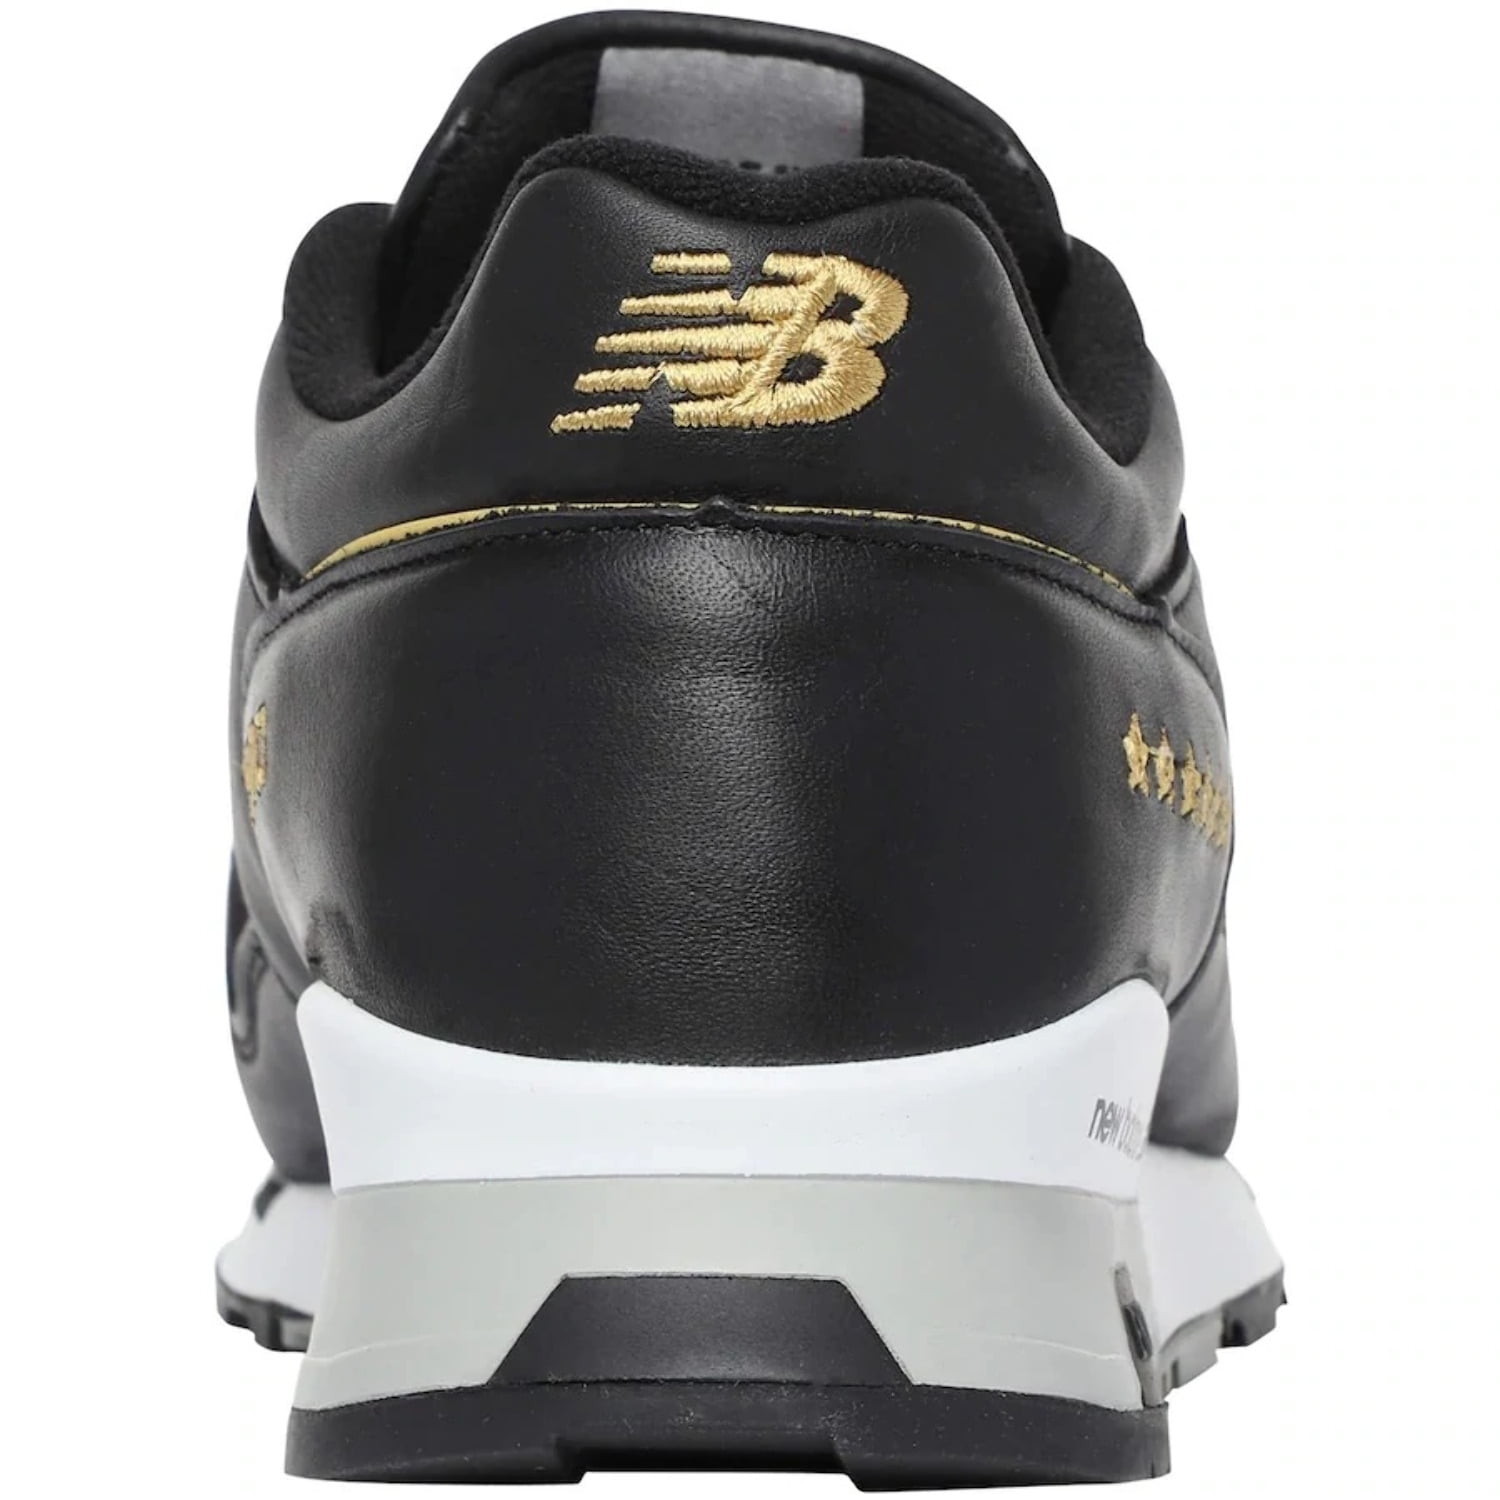 New Balance Liverpool Signature Training Shoes - Black / Gold 8 Walmart.com